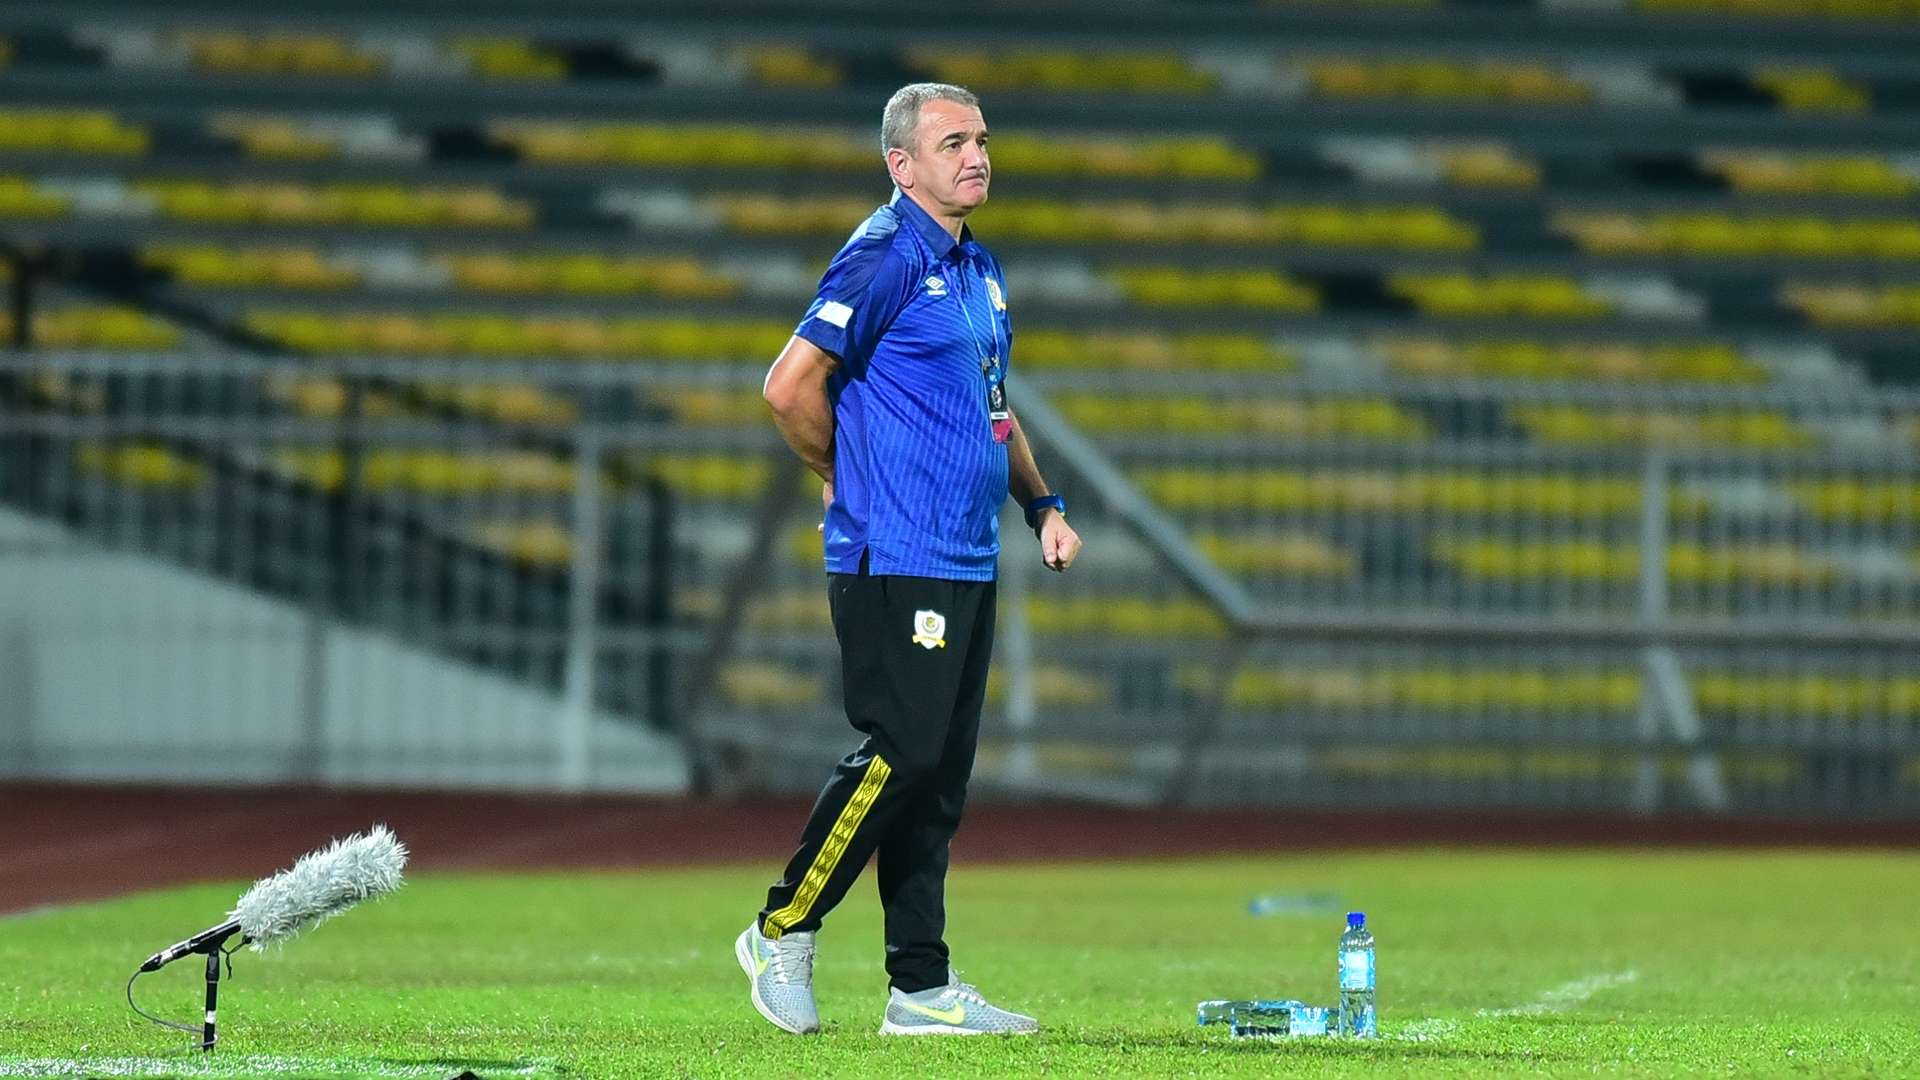 Mehmet Durakovic, Perak v Selangor, Malaysia Super League, 10 Jul 2019